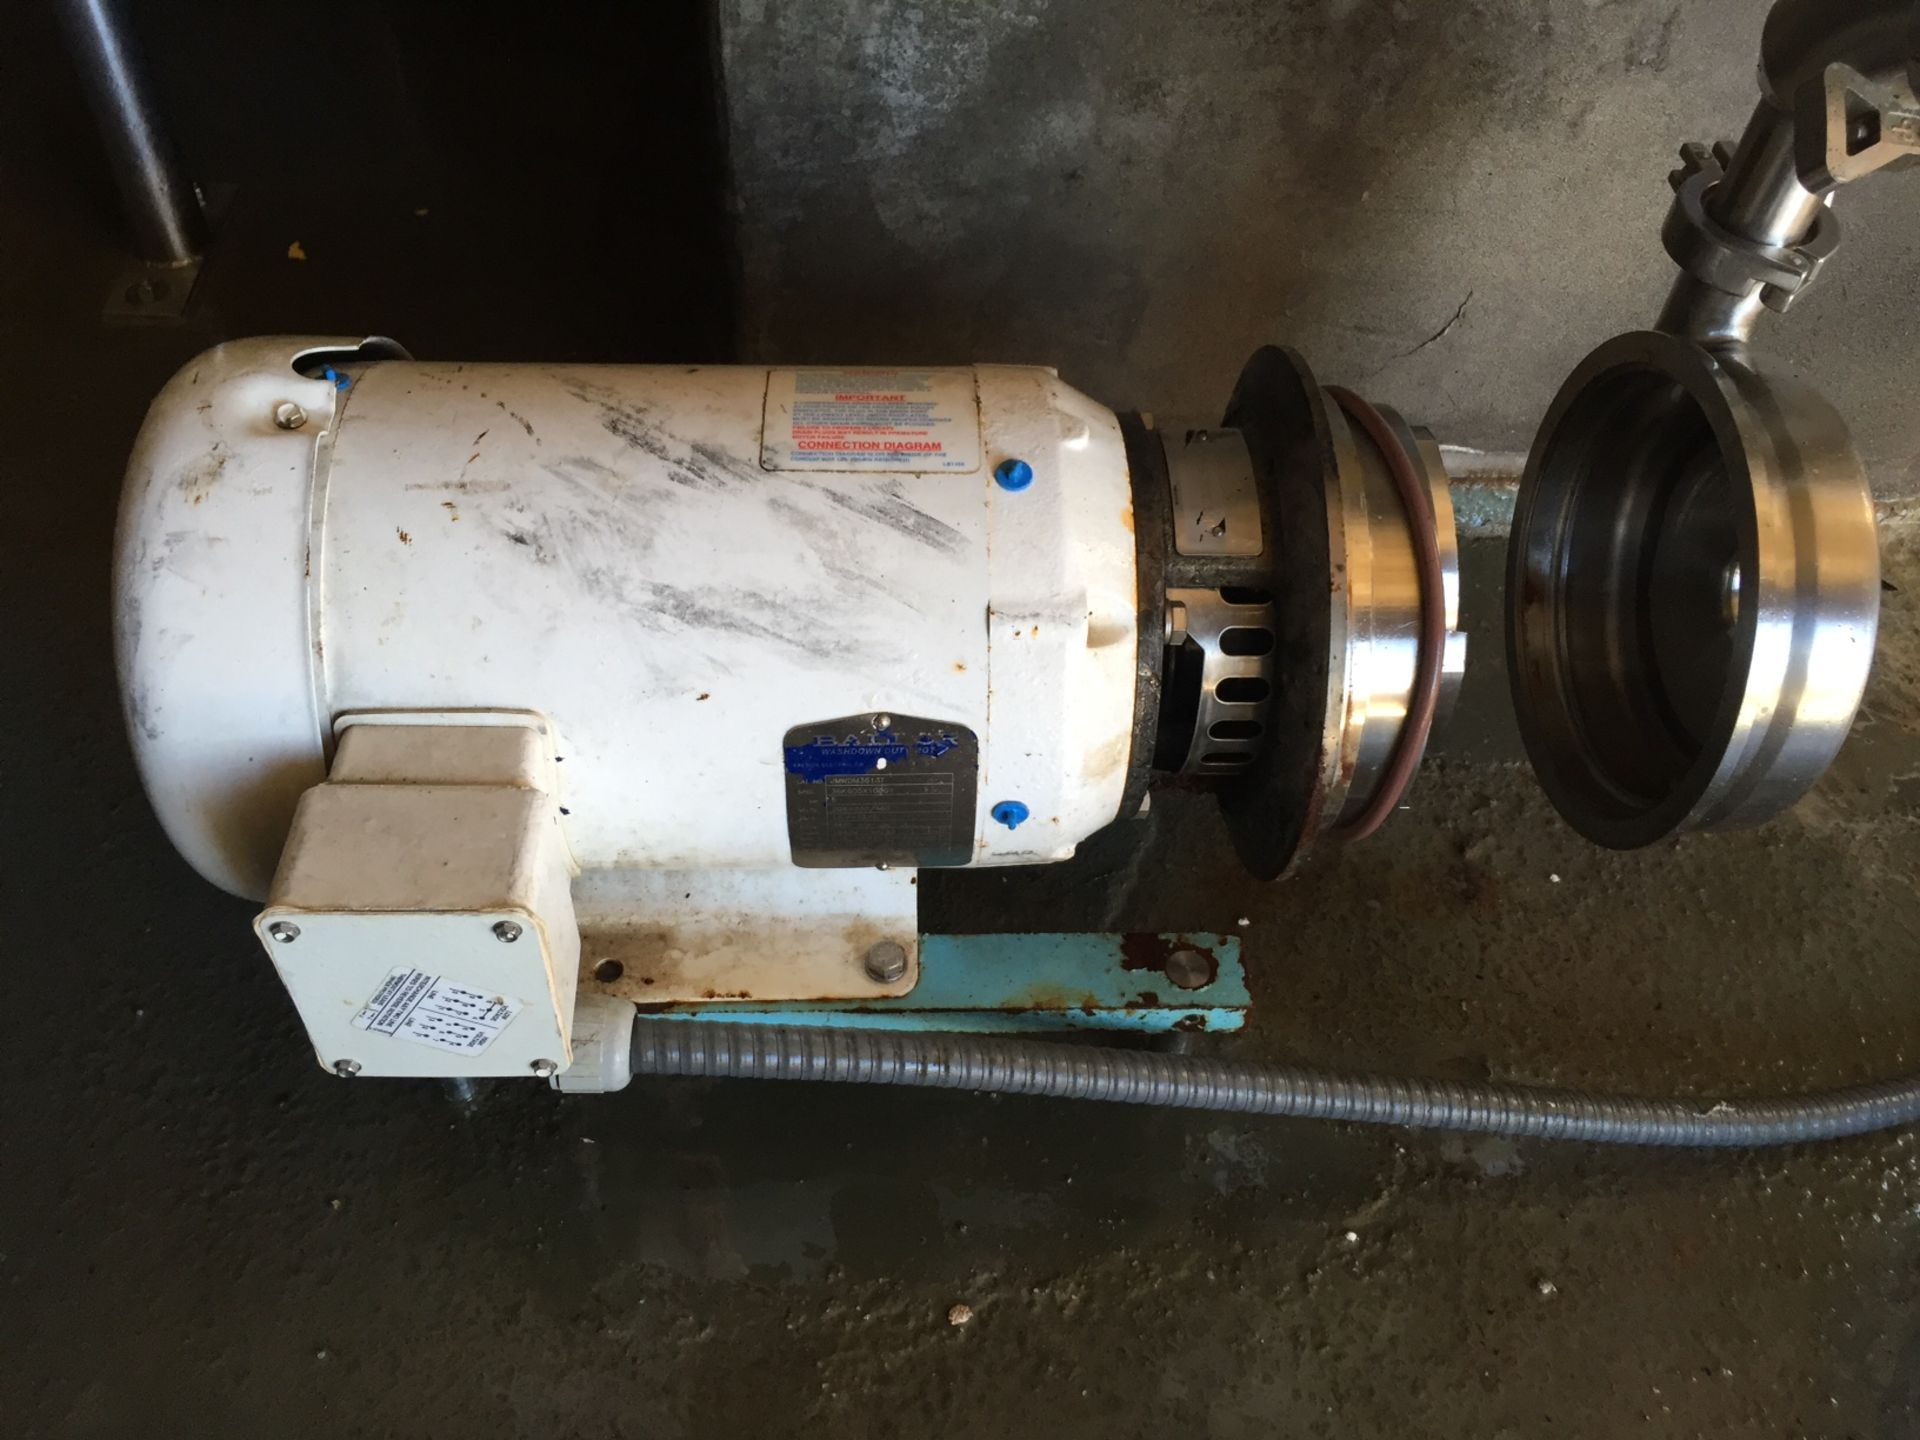 WCB Centrifugal Pump 1-1/2" x 2", S/N 391268-05, Model 20651, 5Hp Motor, 230/460, 3 Phase